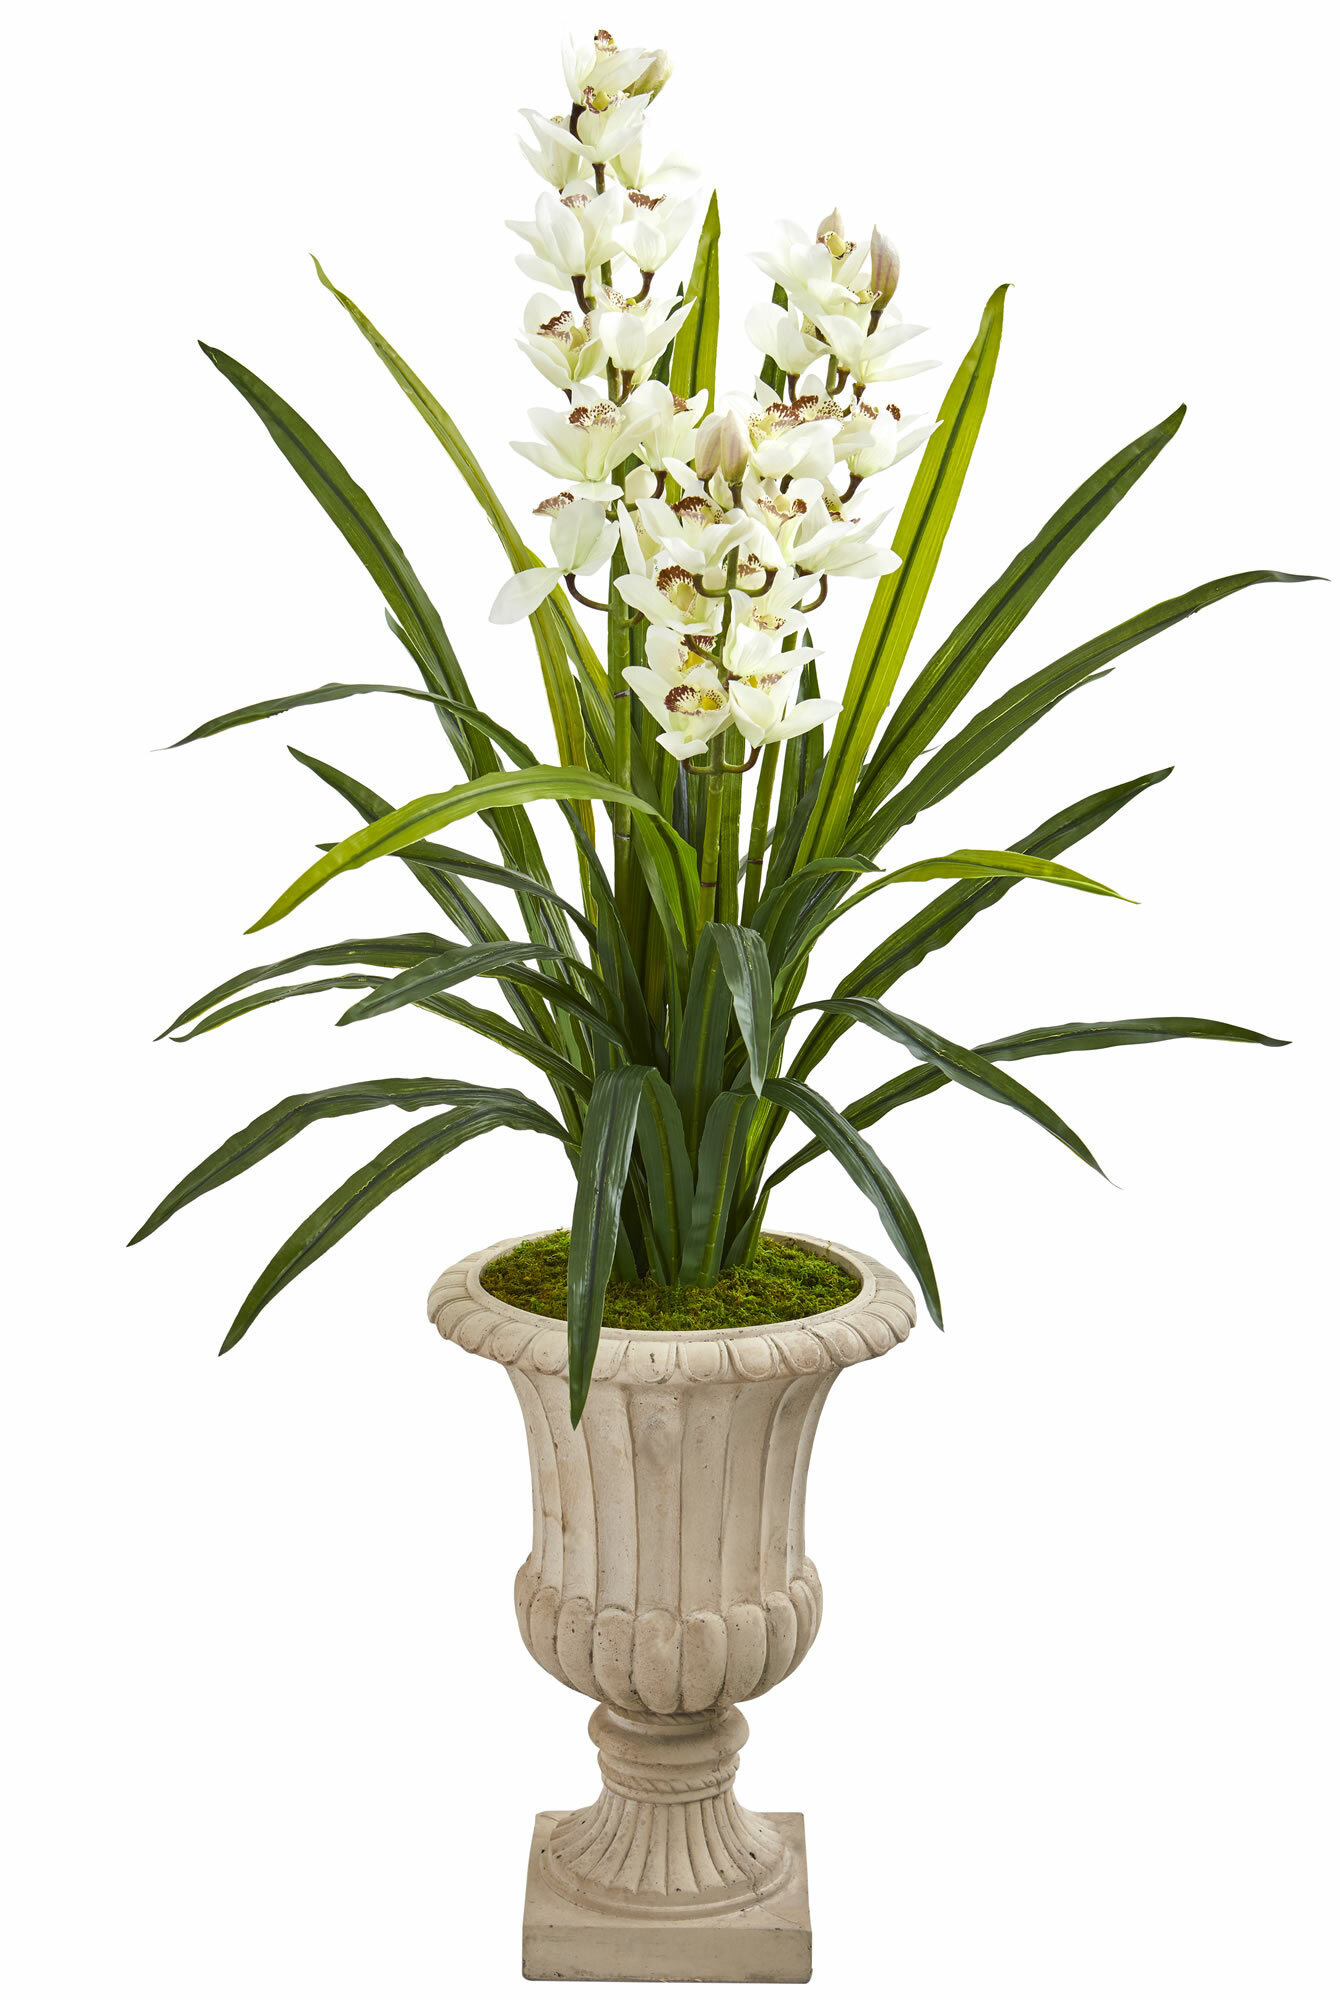 Charlton Home® Artificial Cymbidium Orchids Floral Arrangement In Vase Wayfair